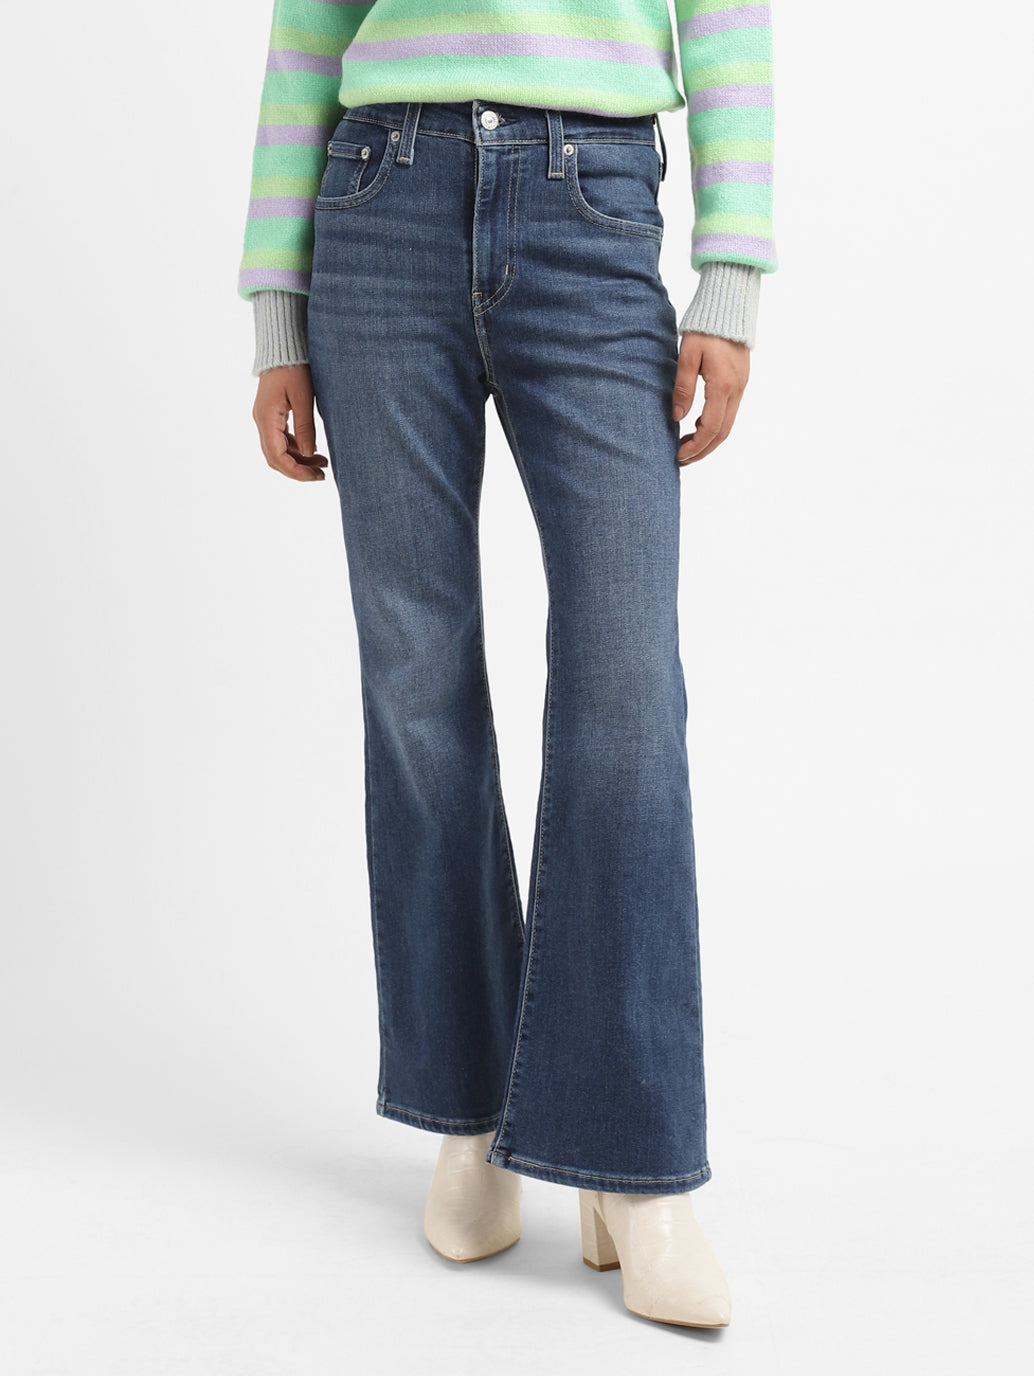 100% Original Levi's (Ladies) jeans Size - 25 to 34 Price- 899 rs